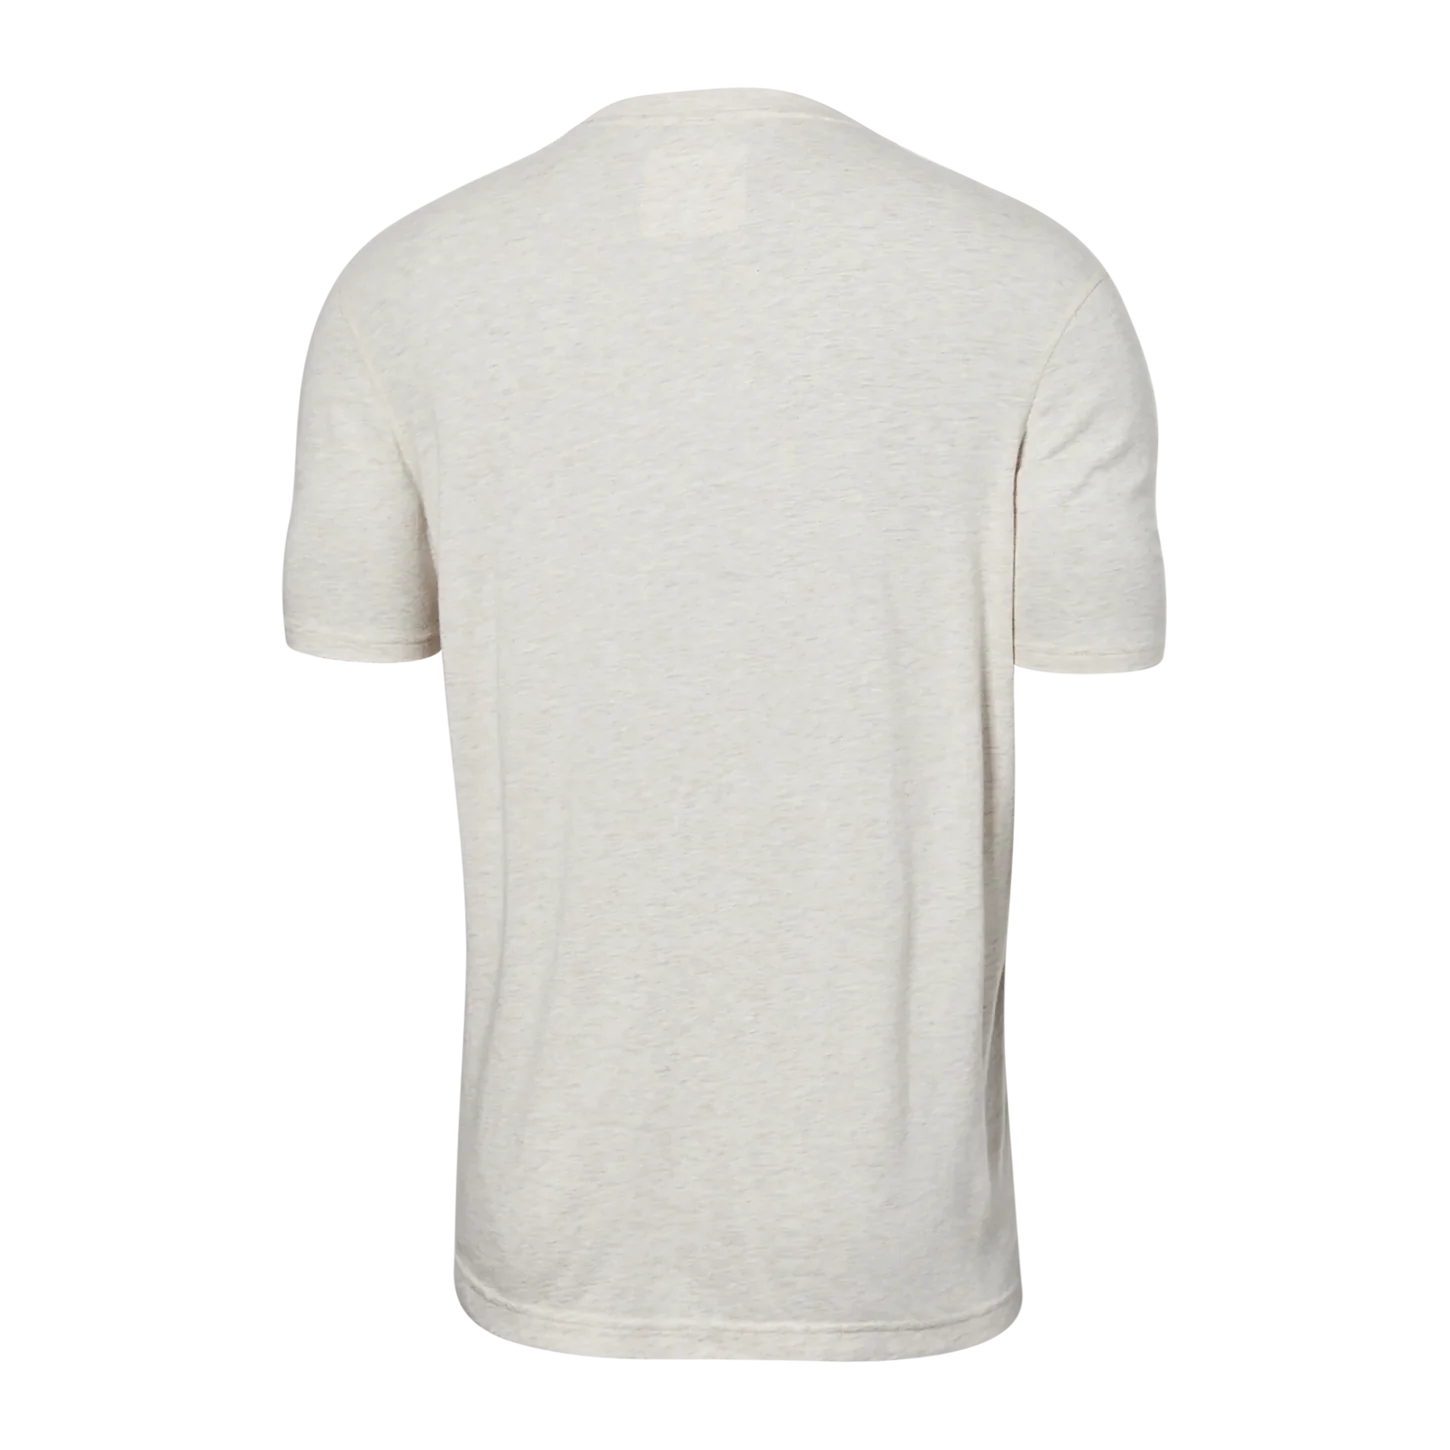 3six five TEE - OATMEAL HEATHER-Shirts & Tops-SAXX-SMALL-OATMEAL HEATHER-Coriander